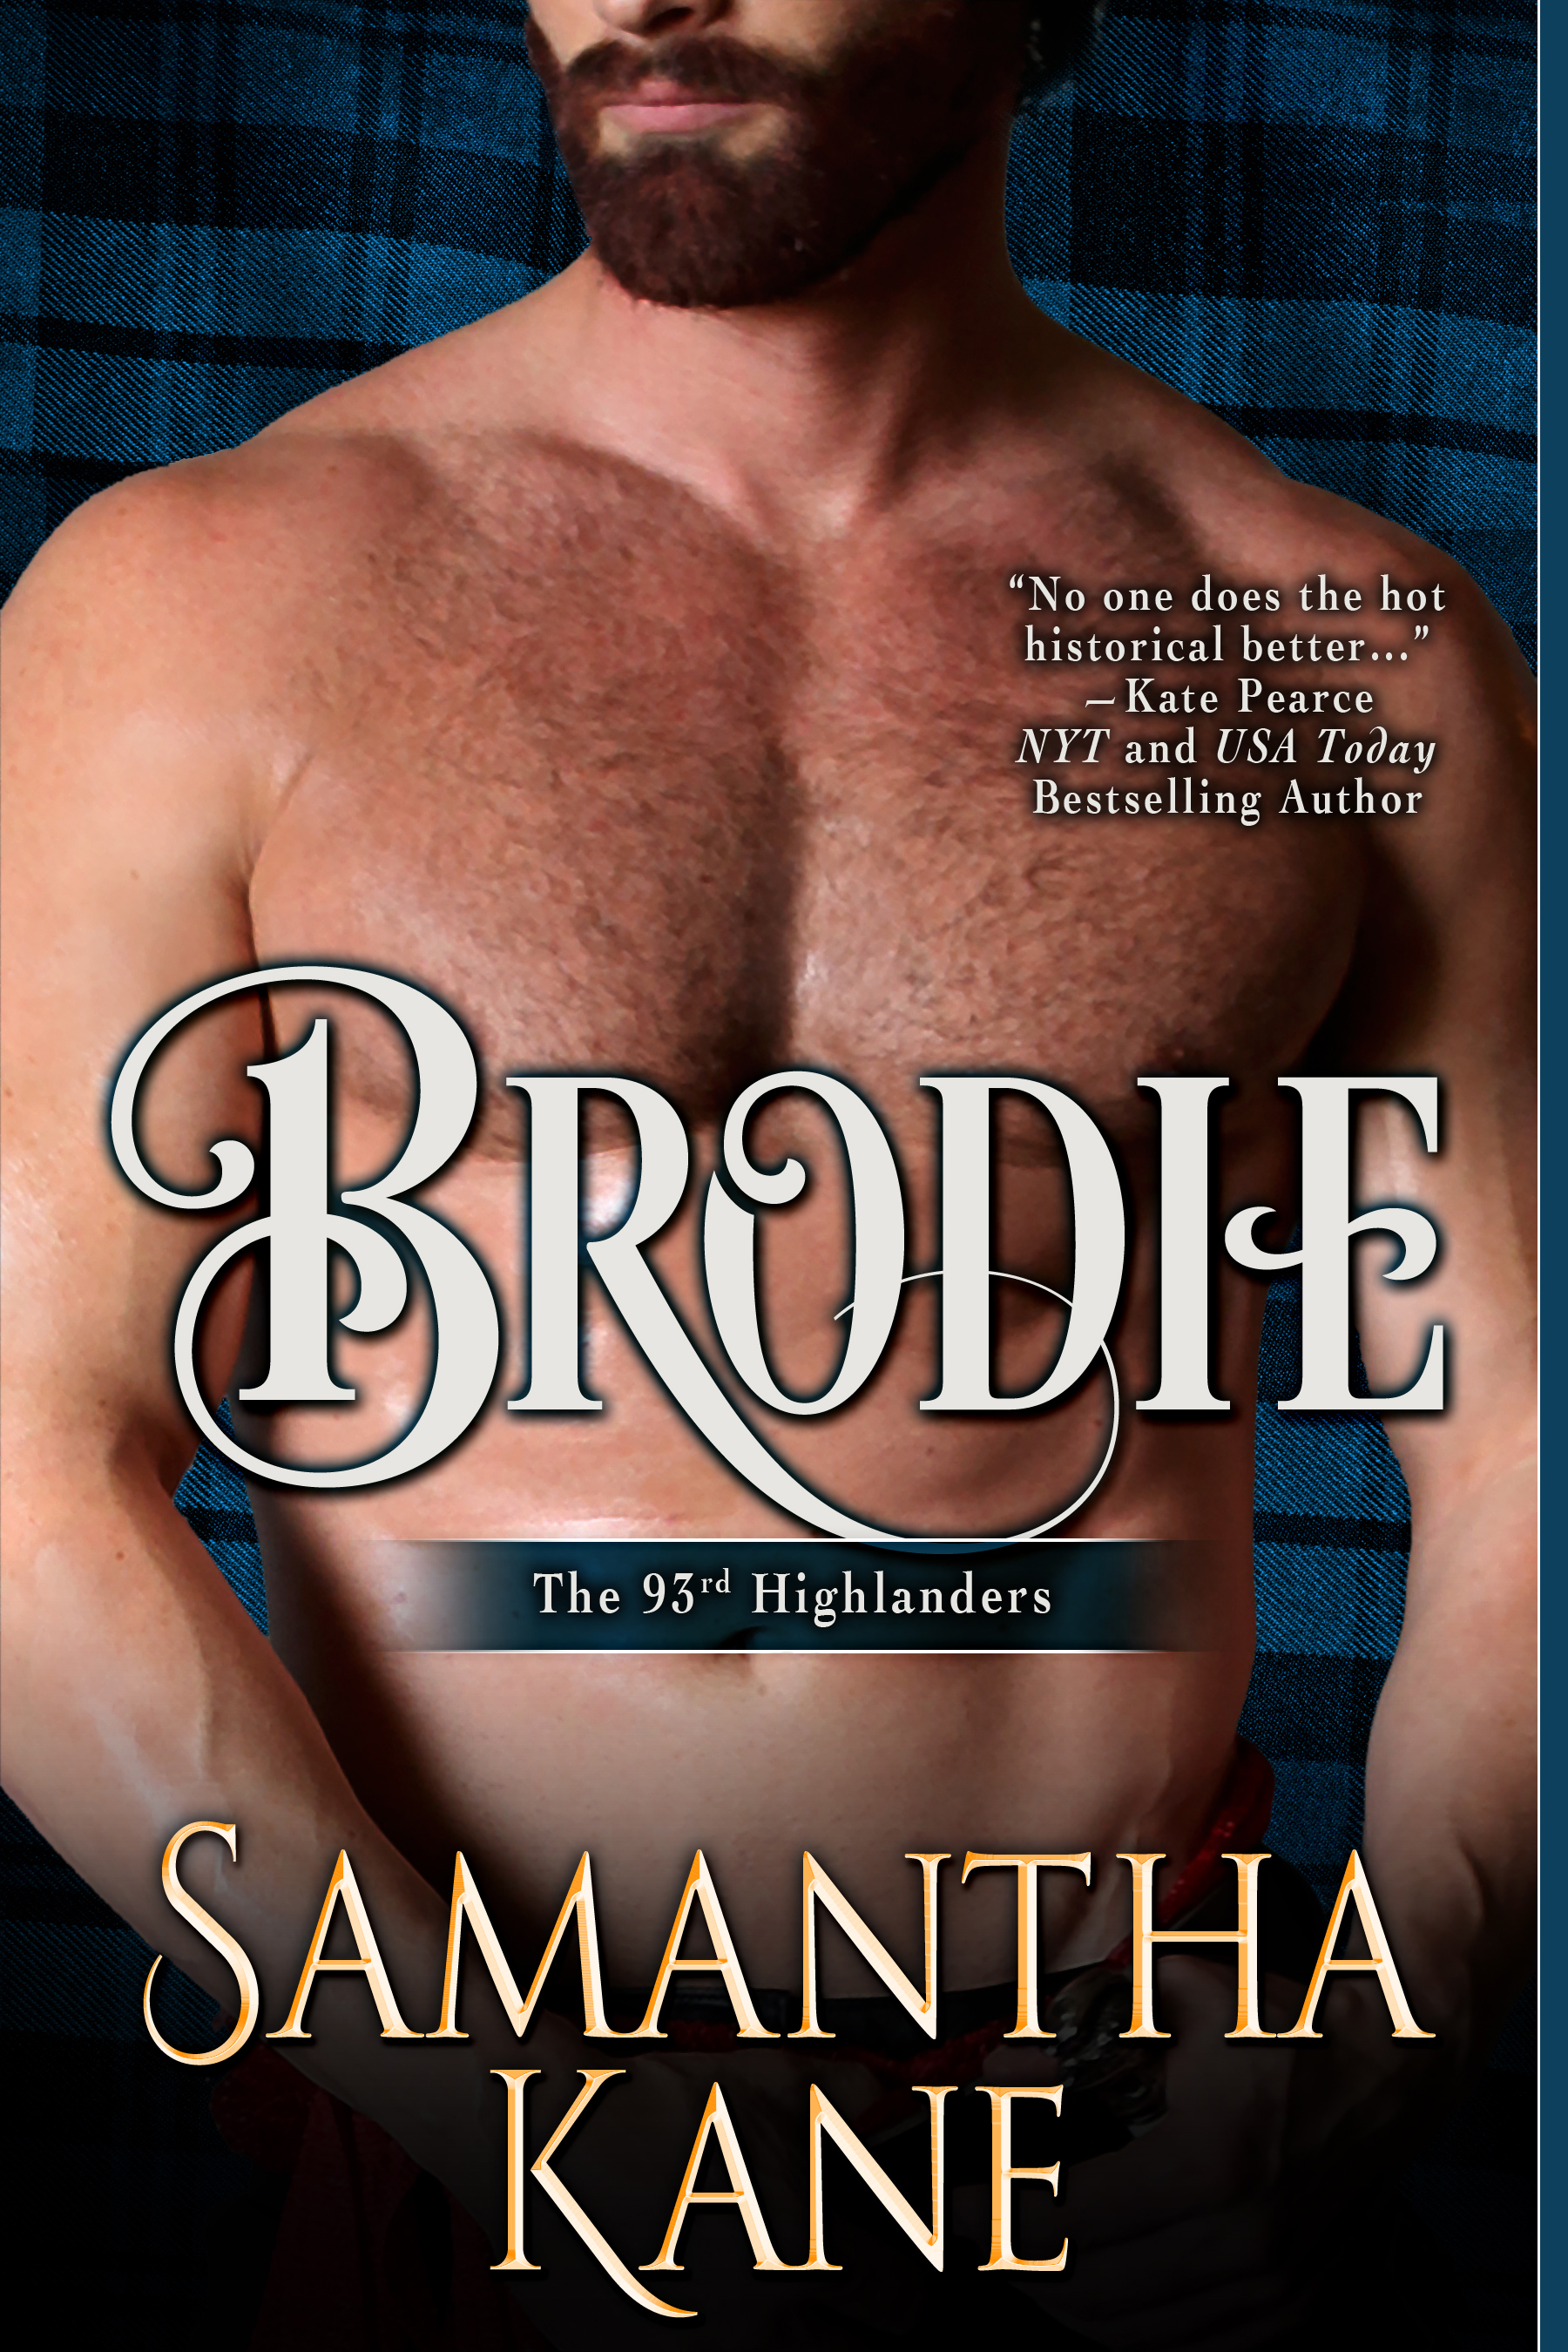 The 93rd Highlanders: Brodie by Samantha Kane